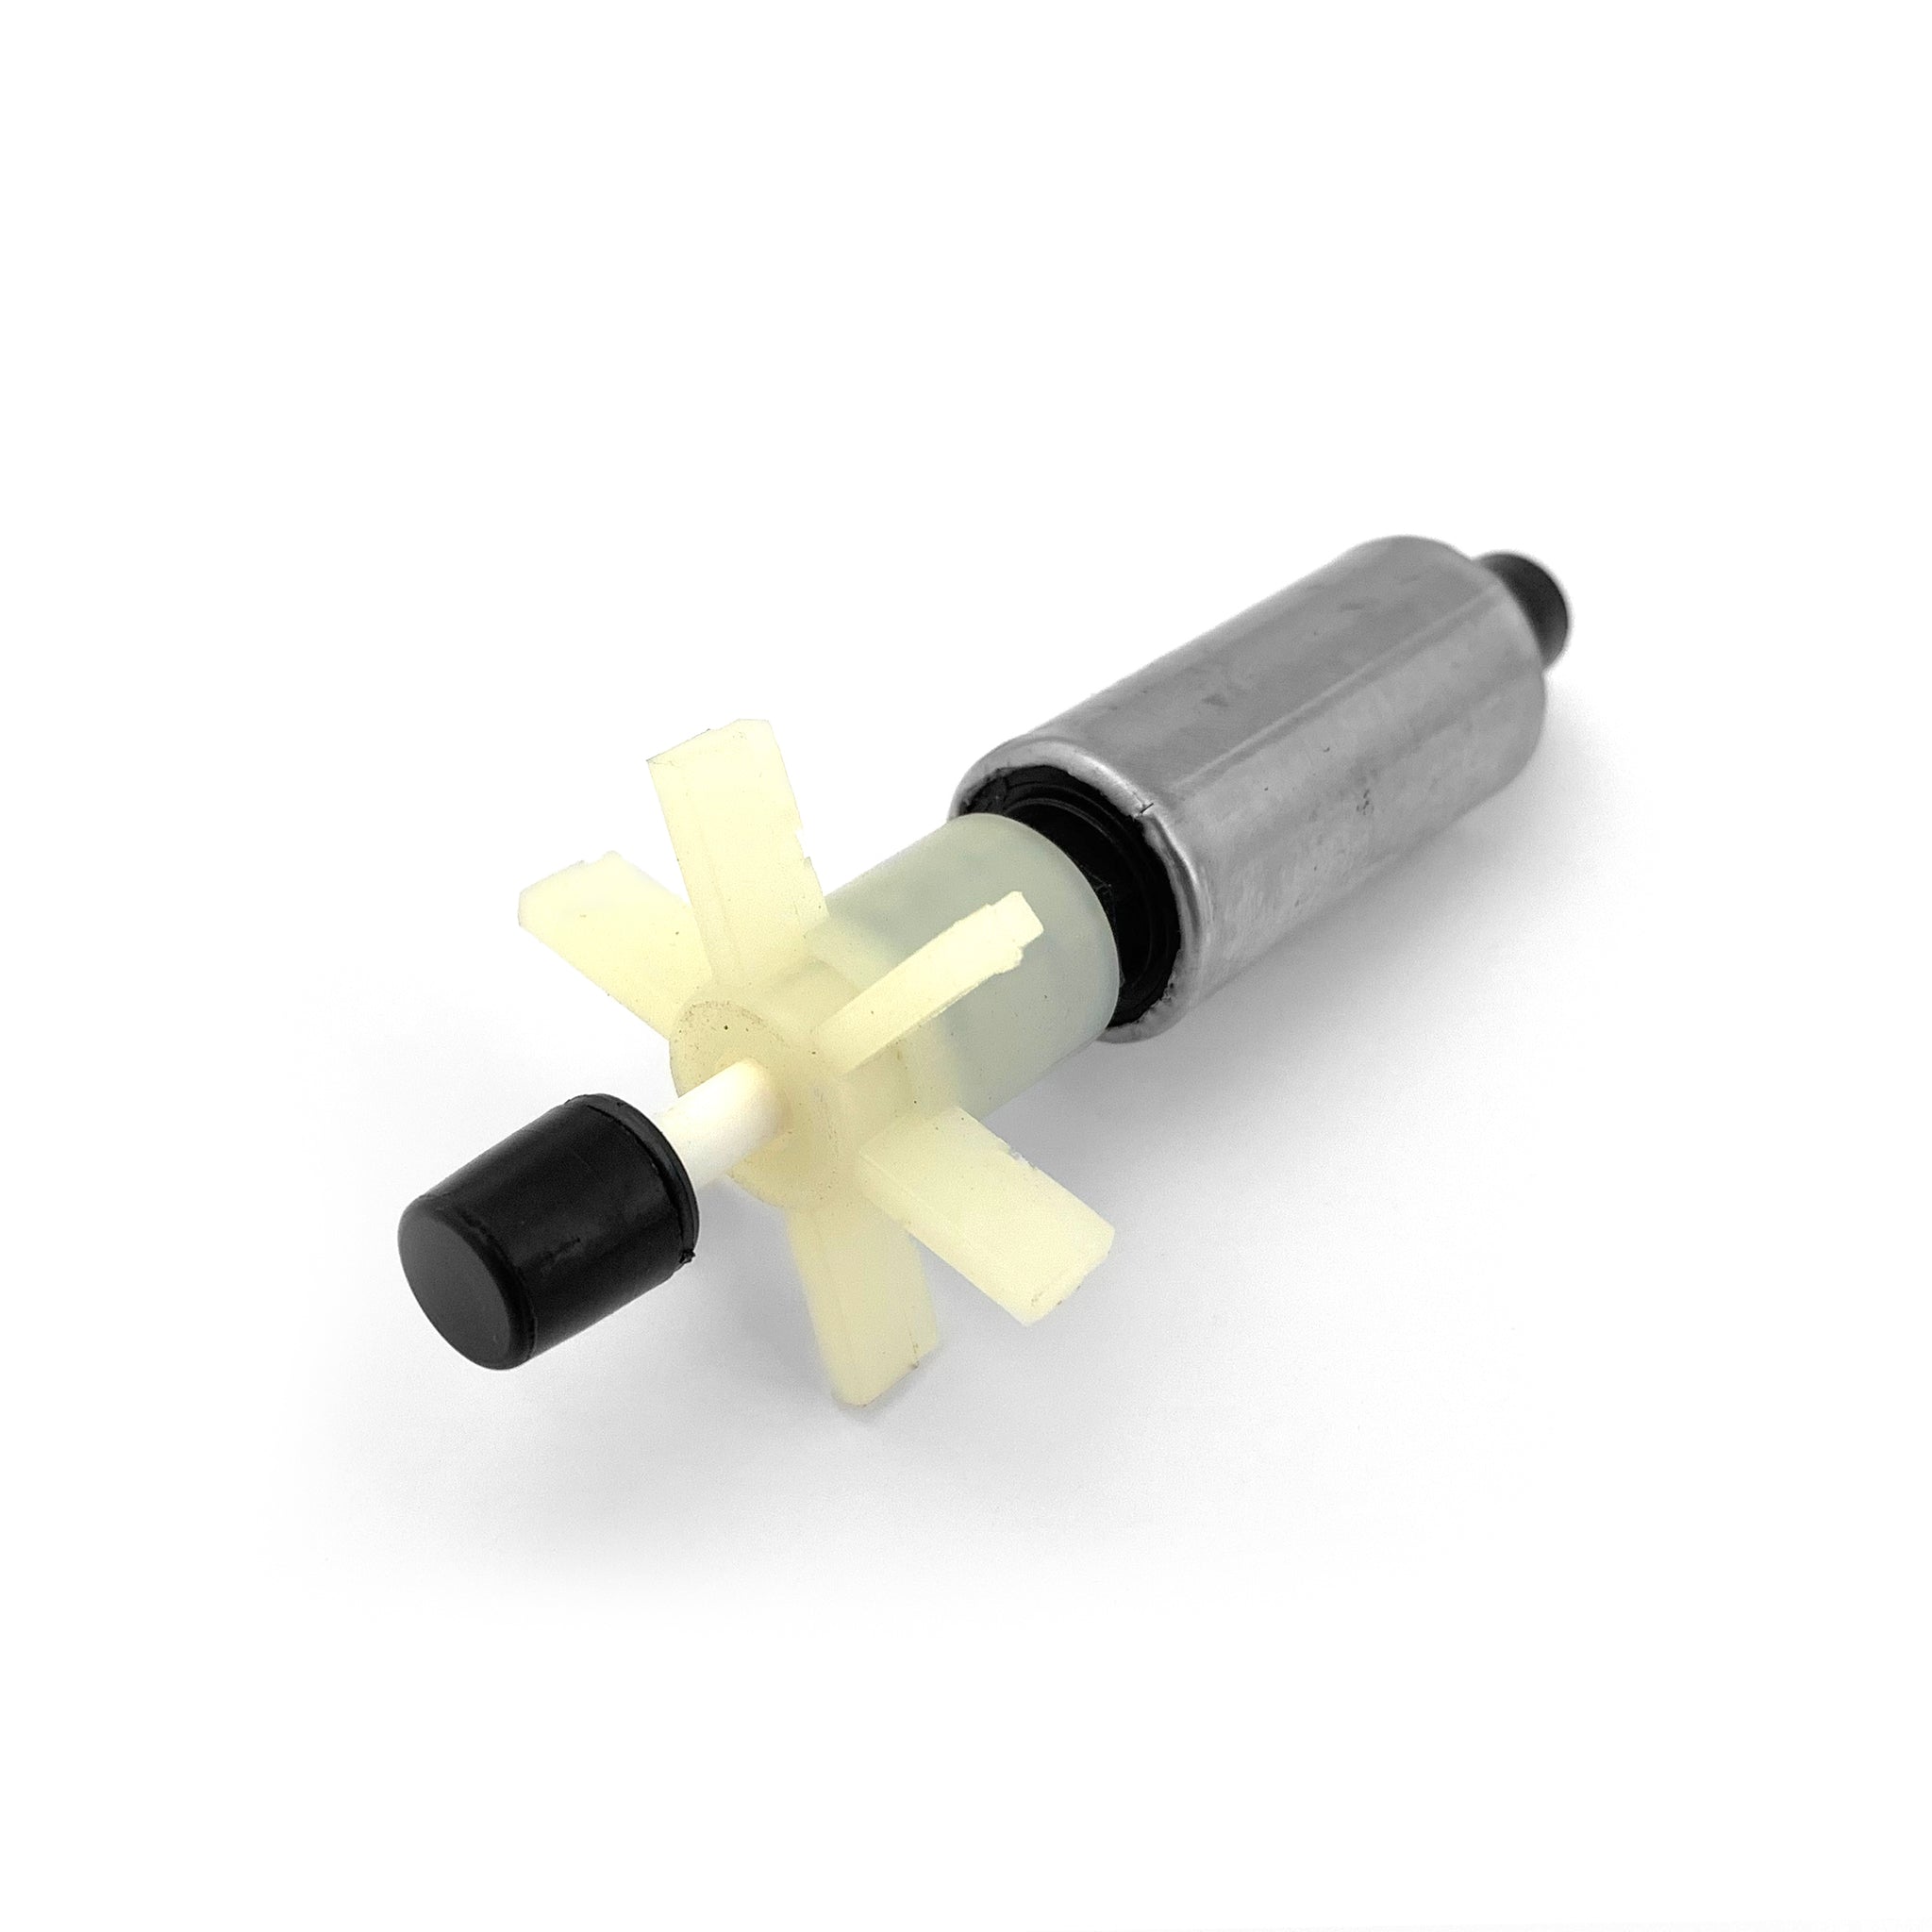 Replacement Impeller for HWGK / Pondmaster ECO 590 GPH Pump